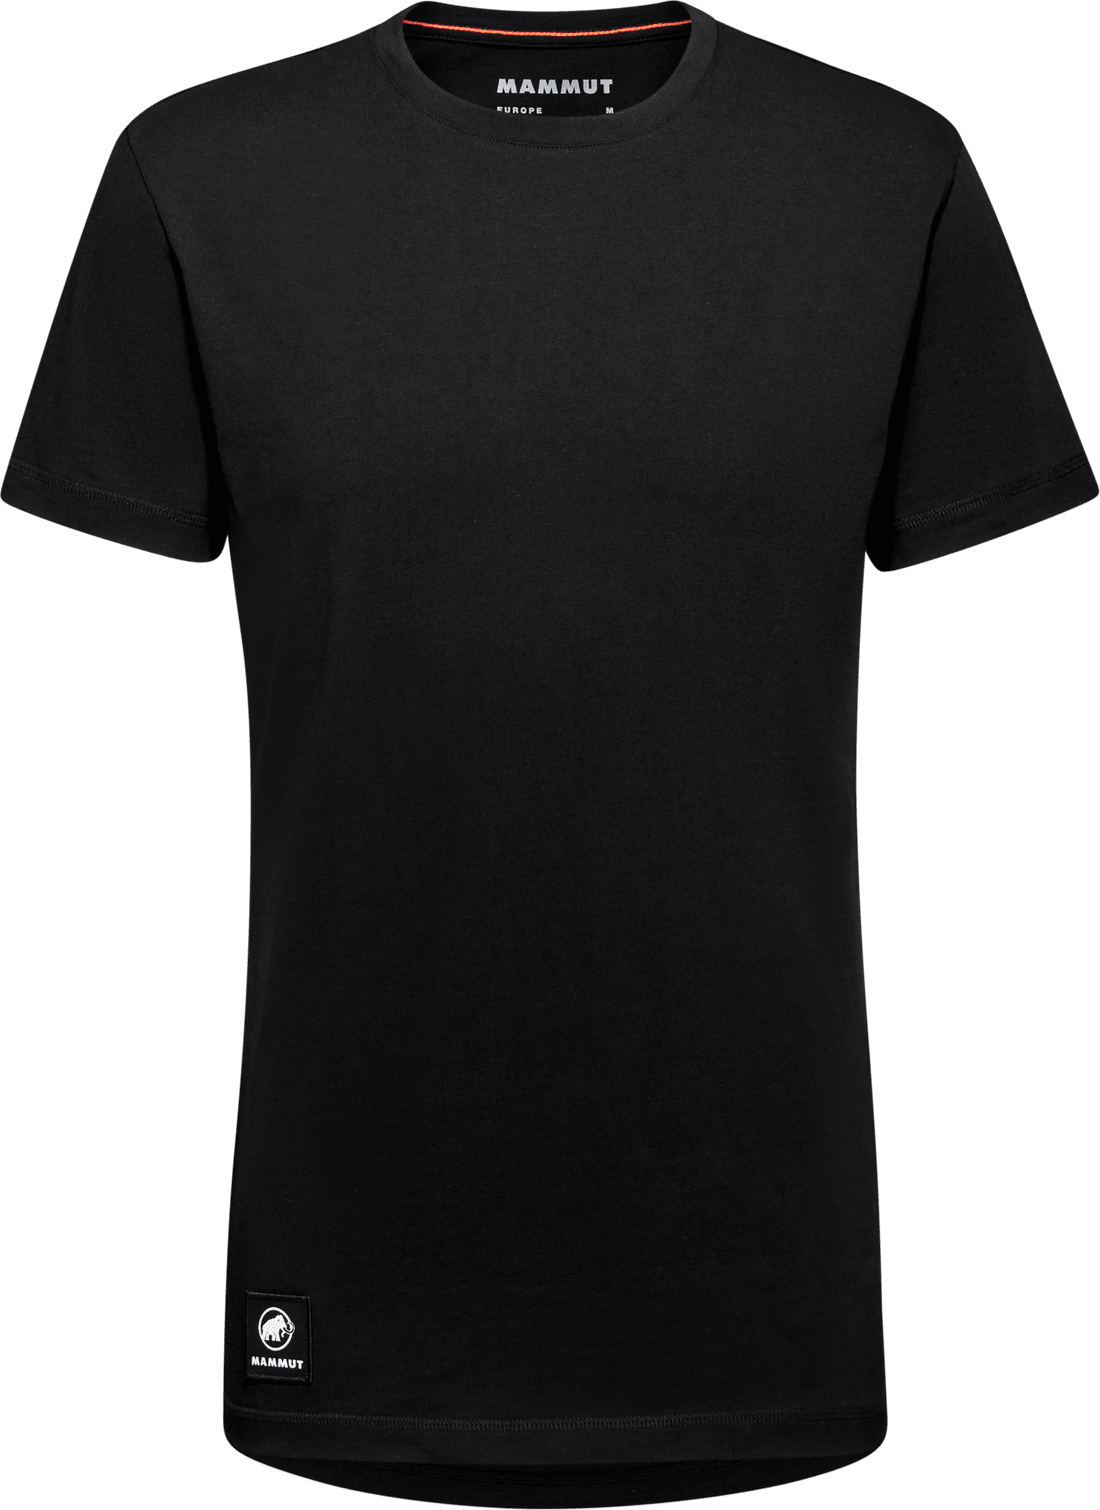 Kauf Mammut Men's Massone T-Shirt Patch bei Outnorth